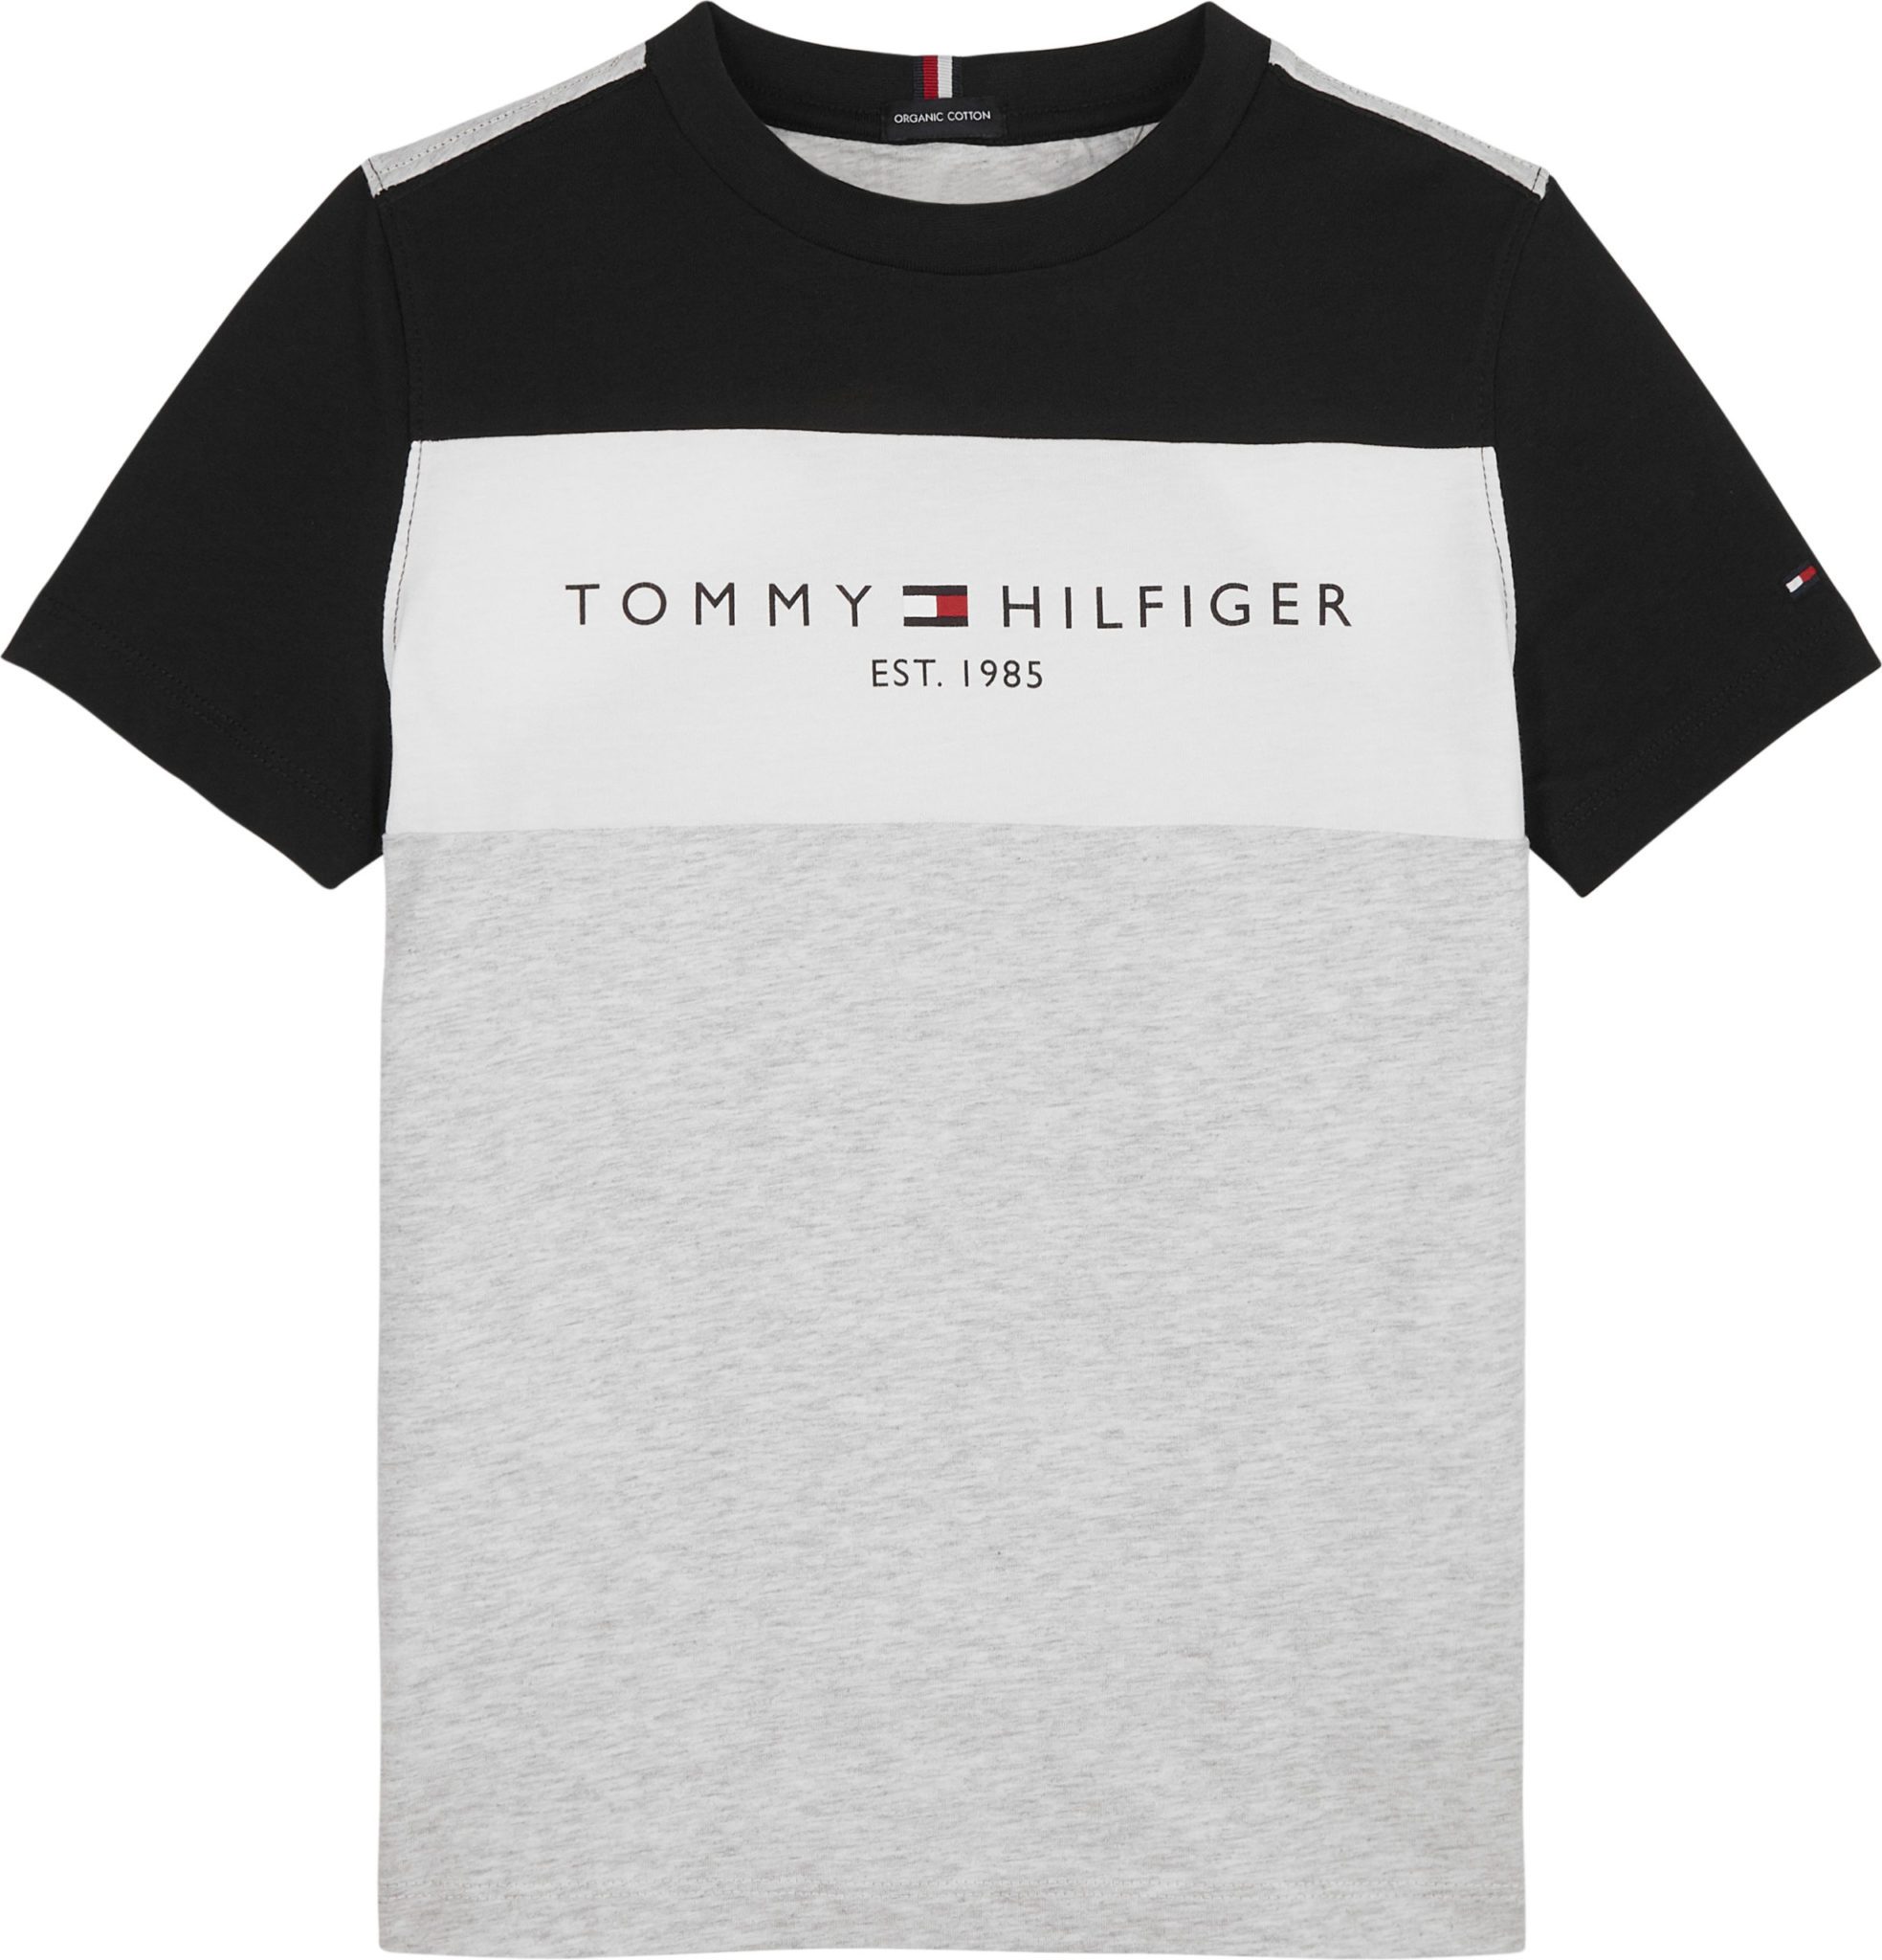 Tommy Hilfiger Grey T-Shirt 6534 - Little Angels Childrenswear